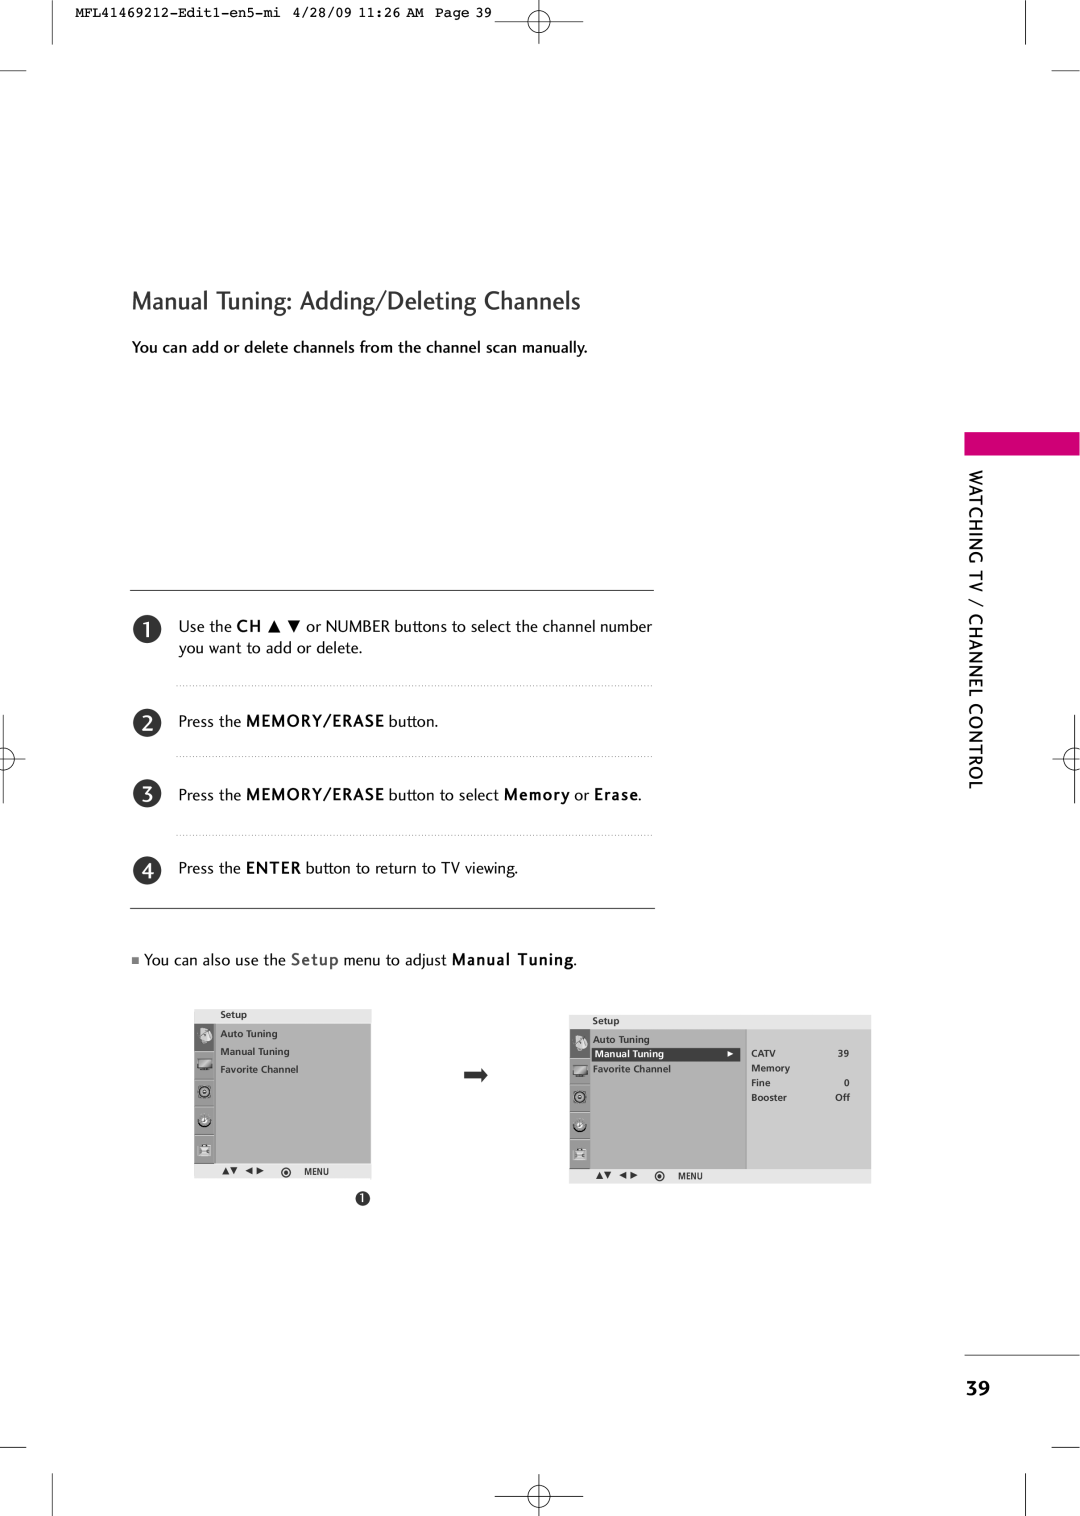 LG Electronics 2230R-MA manual Manual Tuning Adding/Deleting Channels 